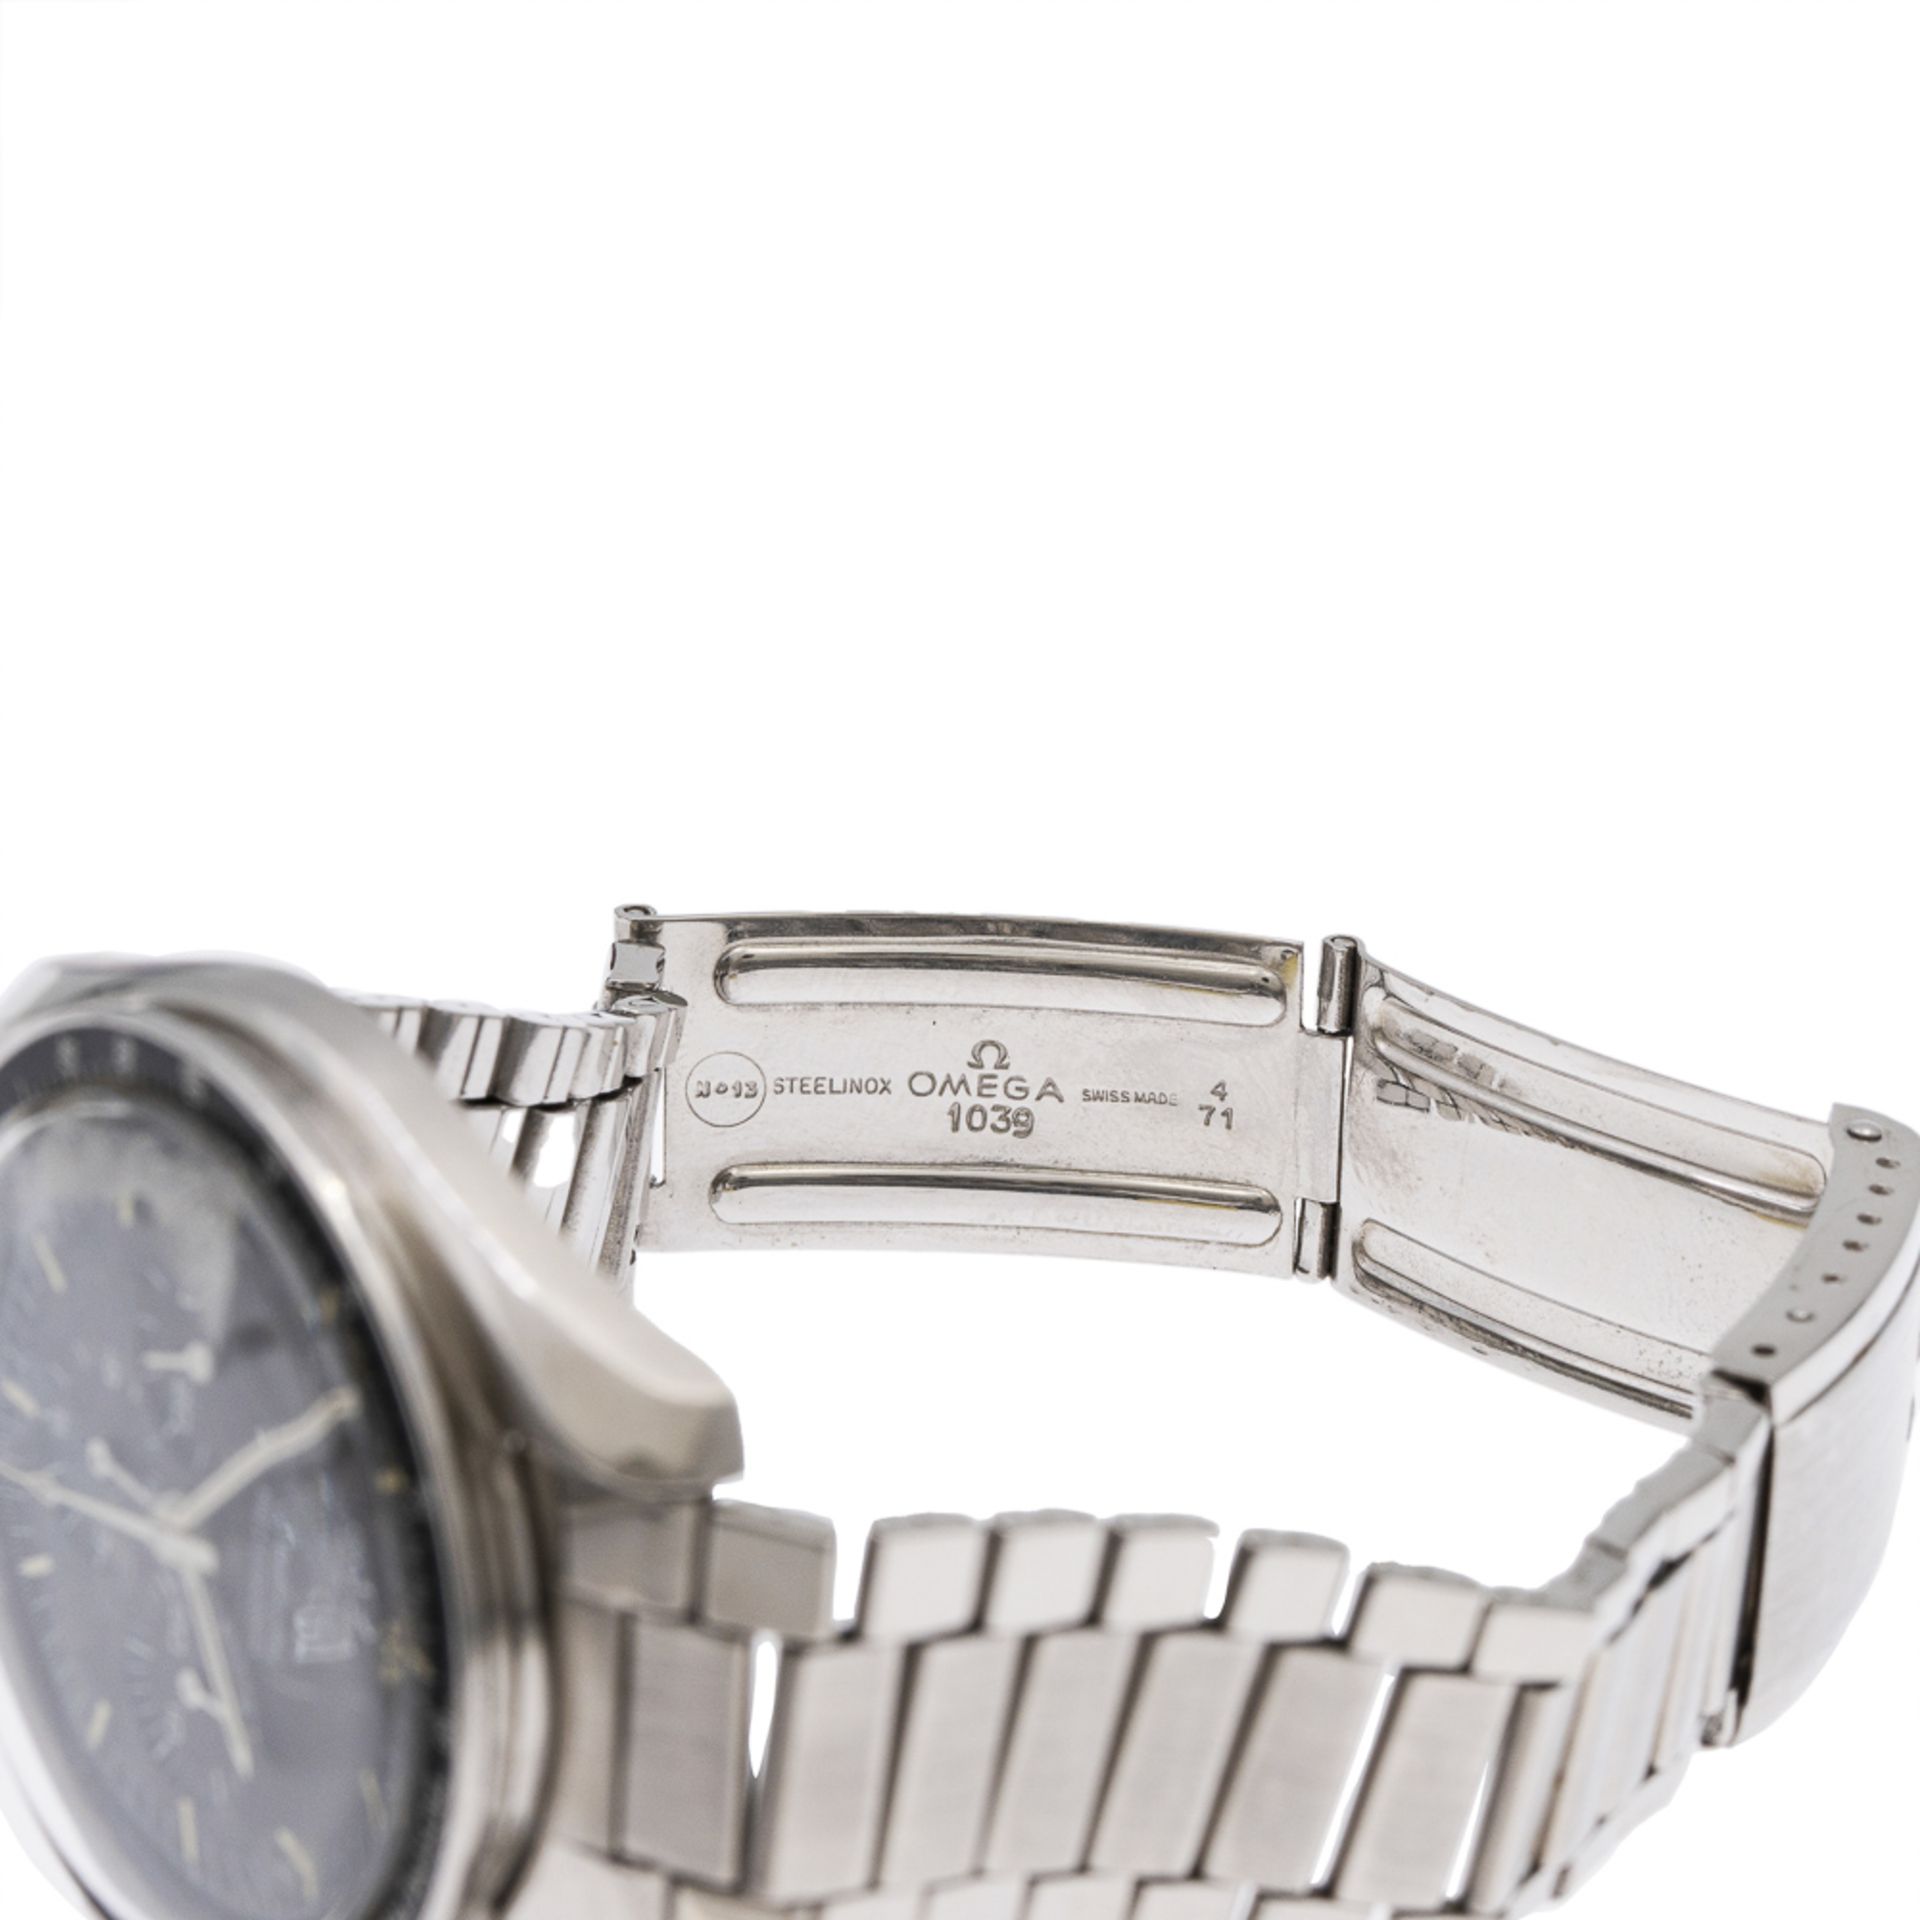 Omega Speedmaster Moonwatch Professional vintage wristwatch - Image 3 of 3